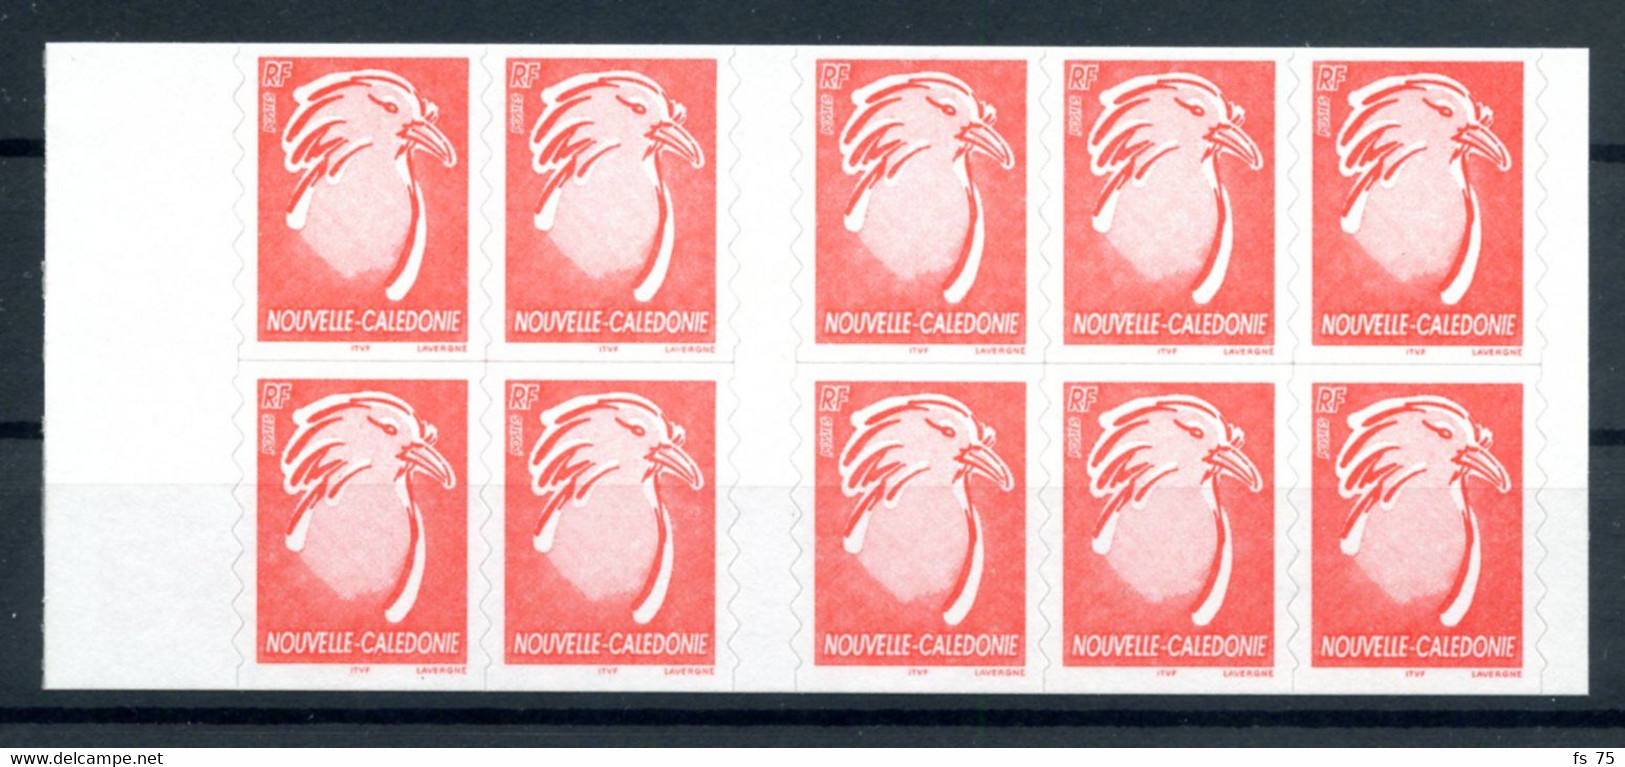 NOUVELLE CALEDONIE N°894 CAGOU - CARNET DE 10 TIMBRES - Unused Stamps